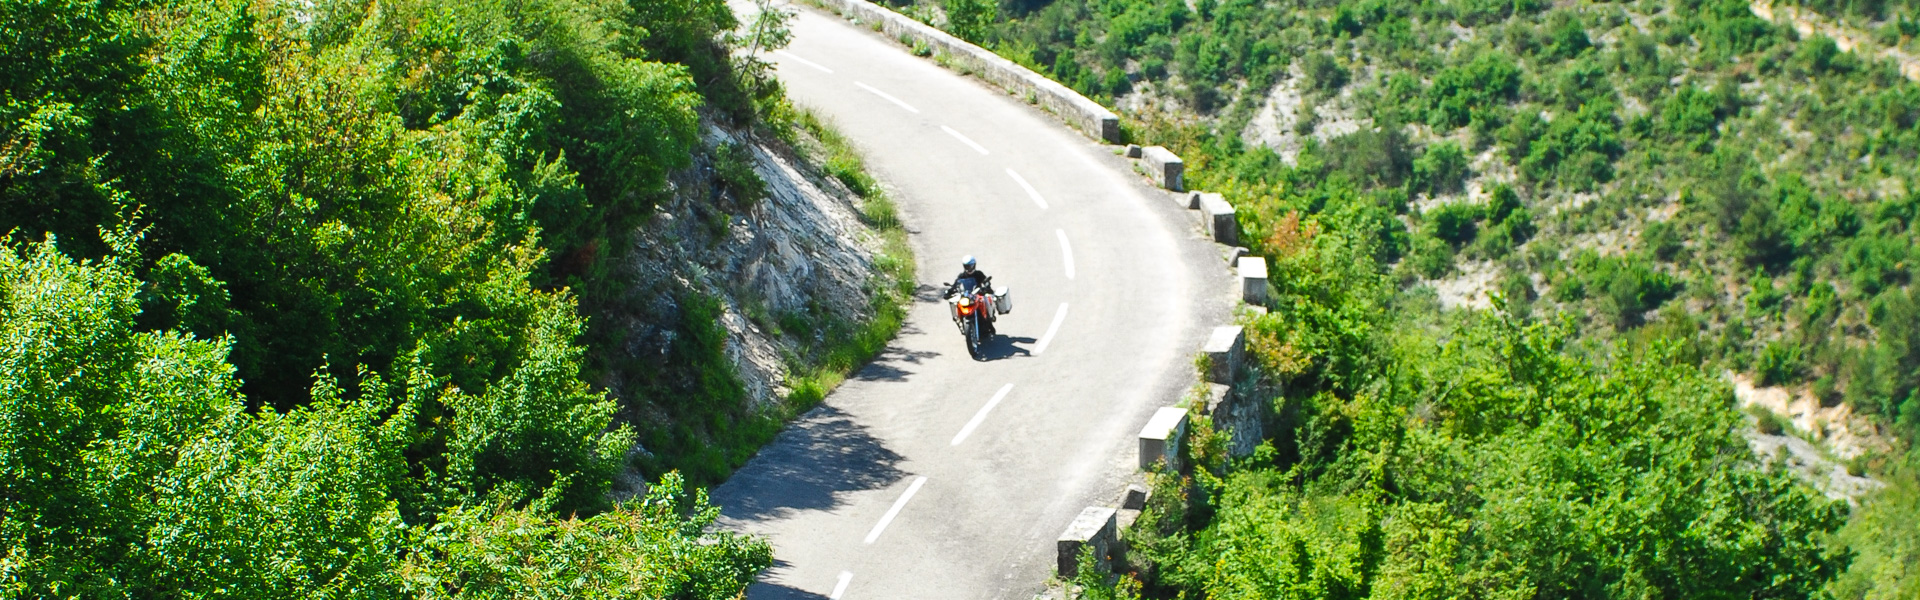 Twisting road, Croatia